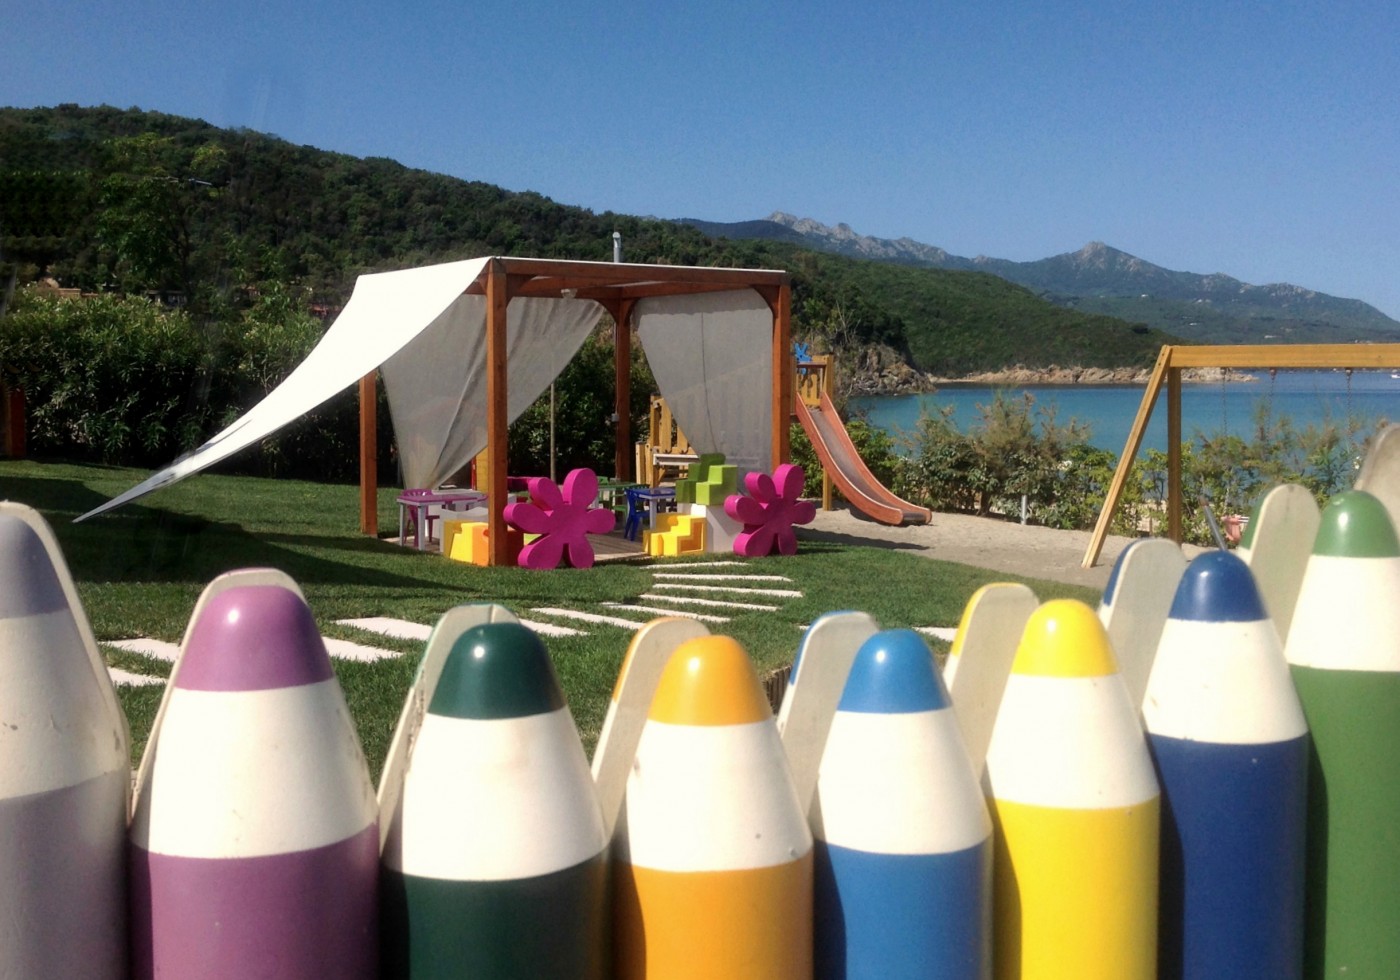 Il Baia Bianca Suites dell' Isola d'Elba, in Toscana è la vacanza perfetta per i bambini, grazie a Kids club, piscina riscaldata, spiaggia bianca, kids menu